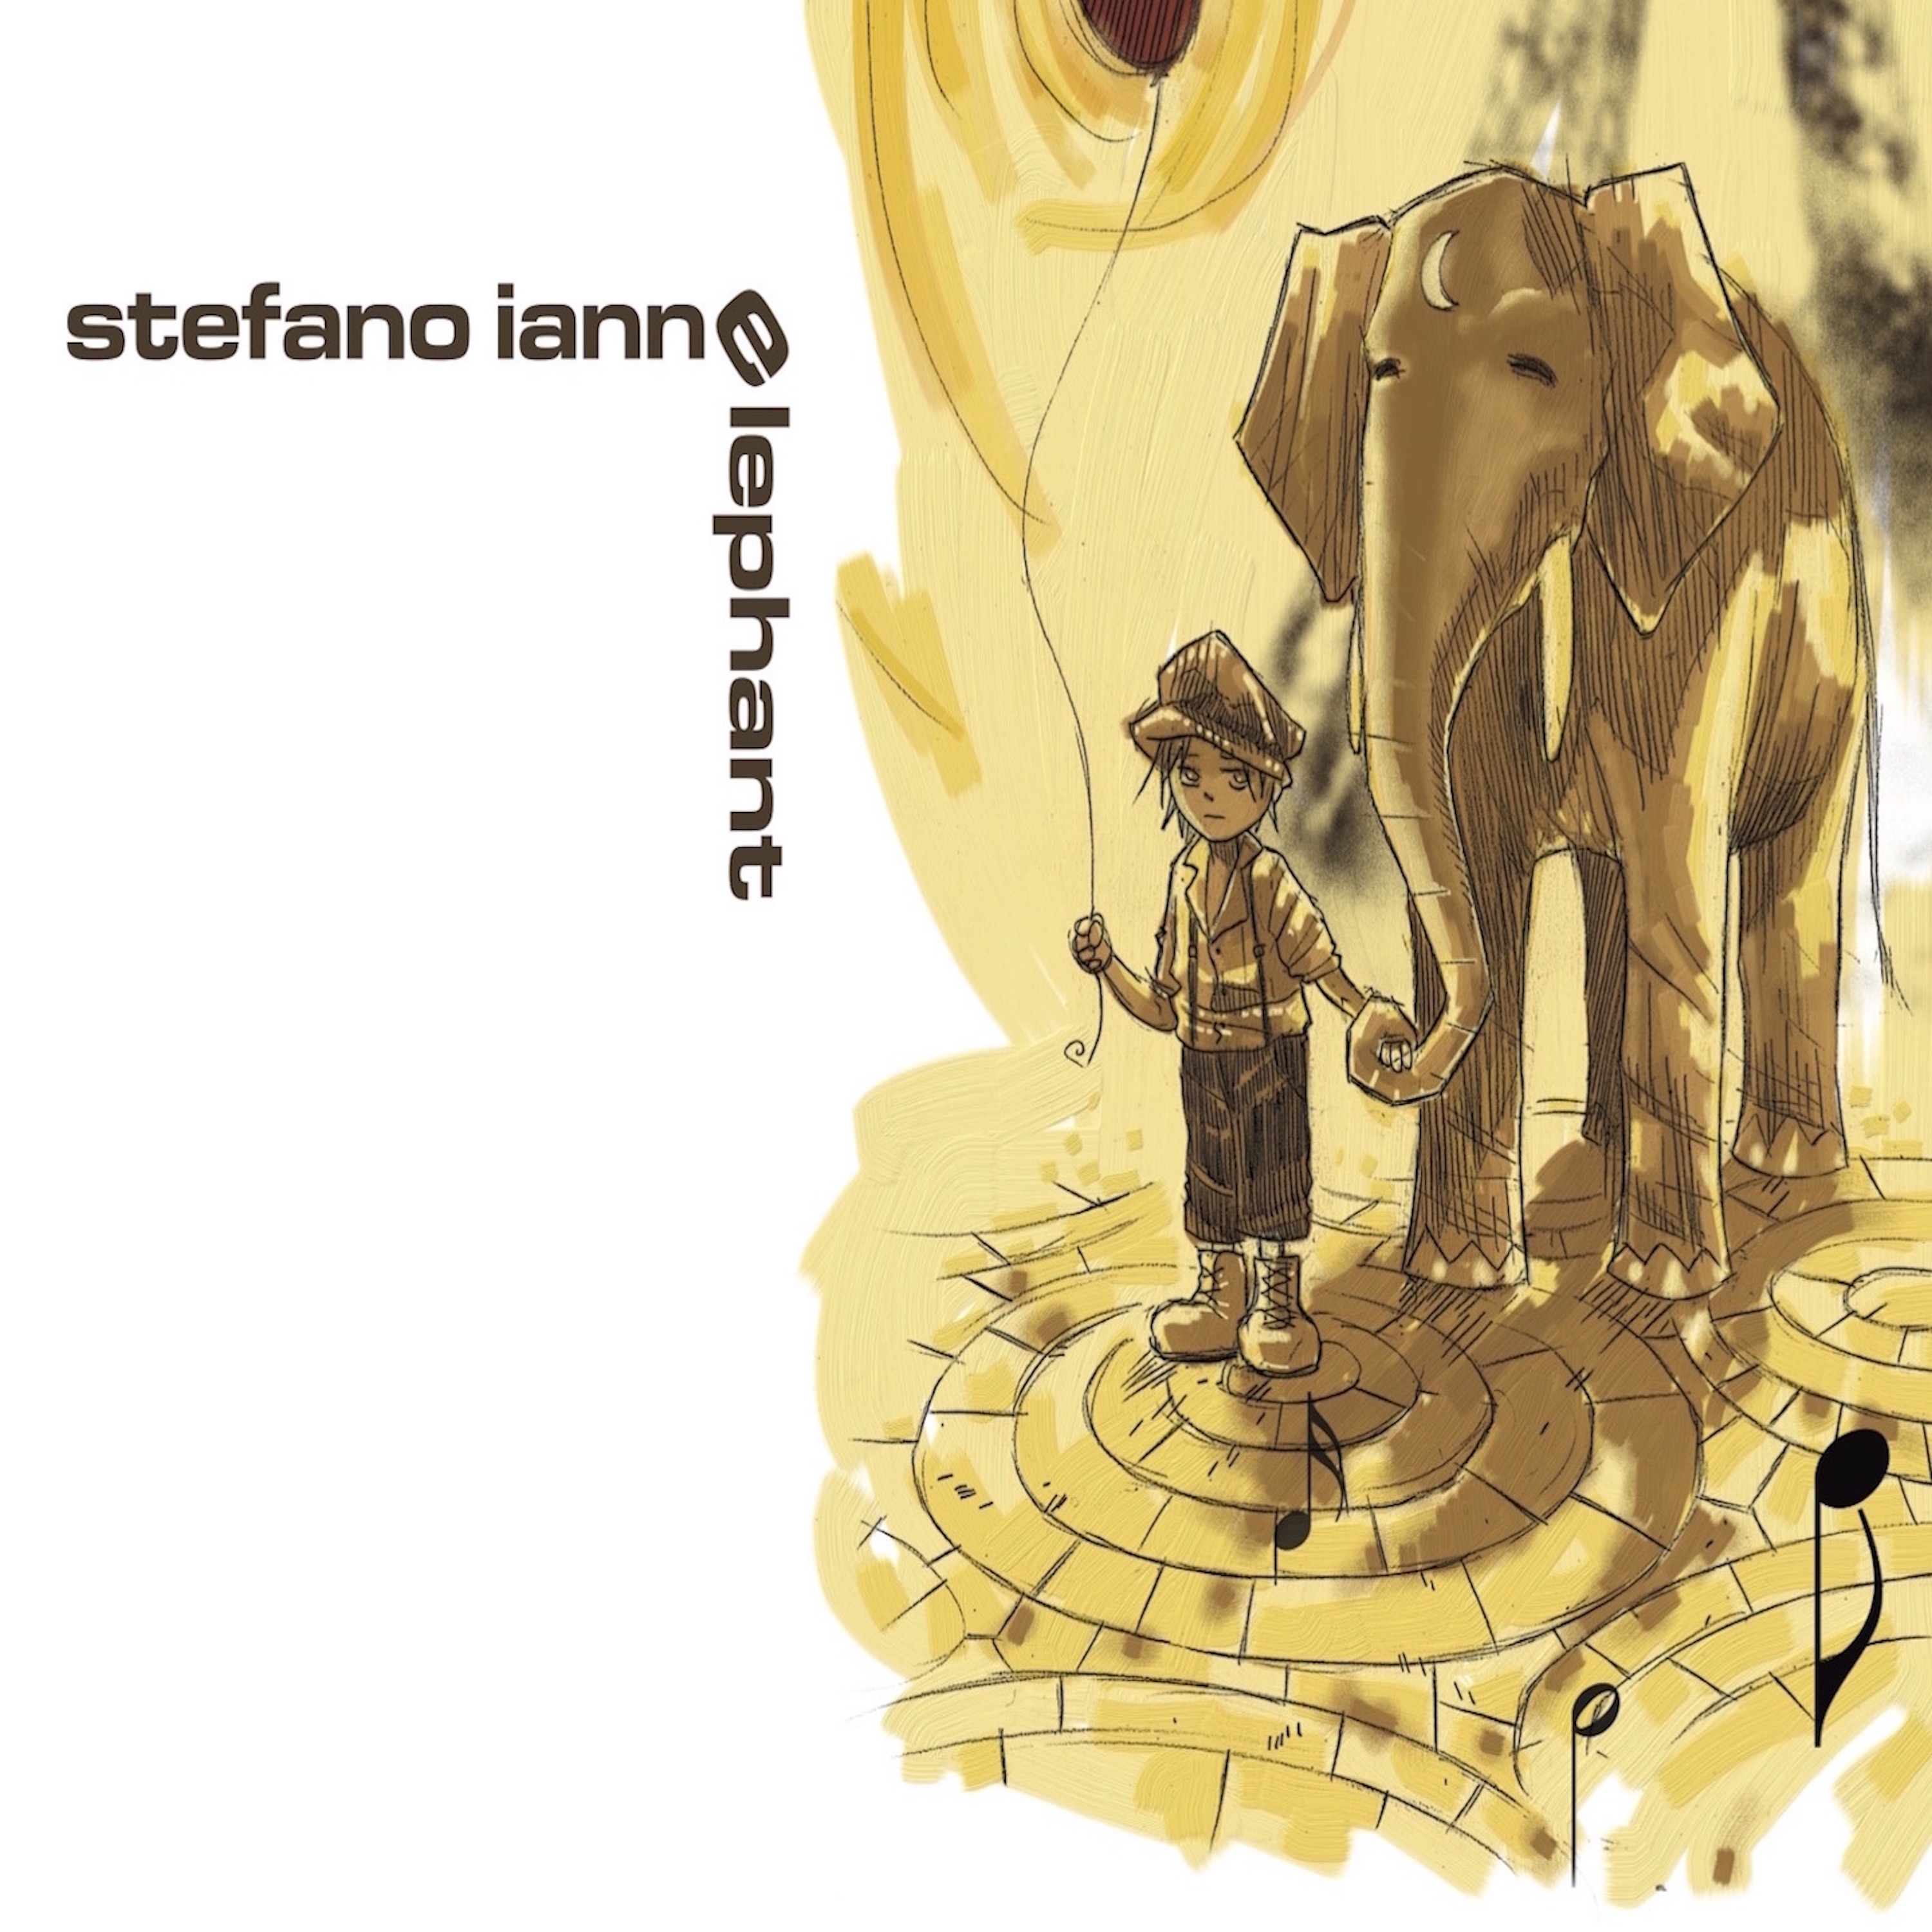 Elephant music. Musical Elephants. Elephant обложка альбома. Слоны и музыка. Elephant Music Obsidian.